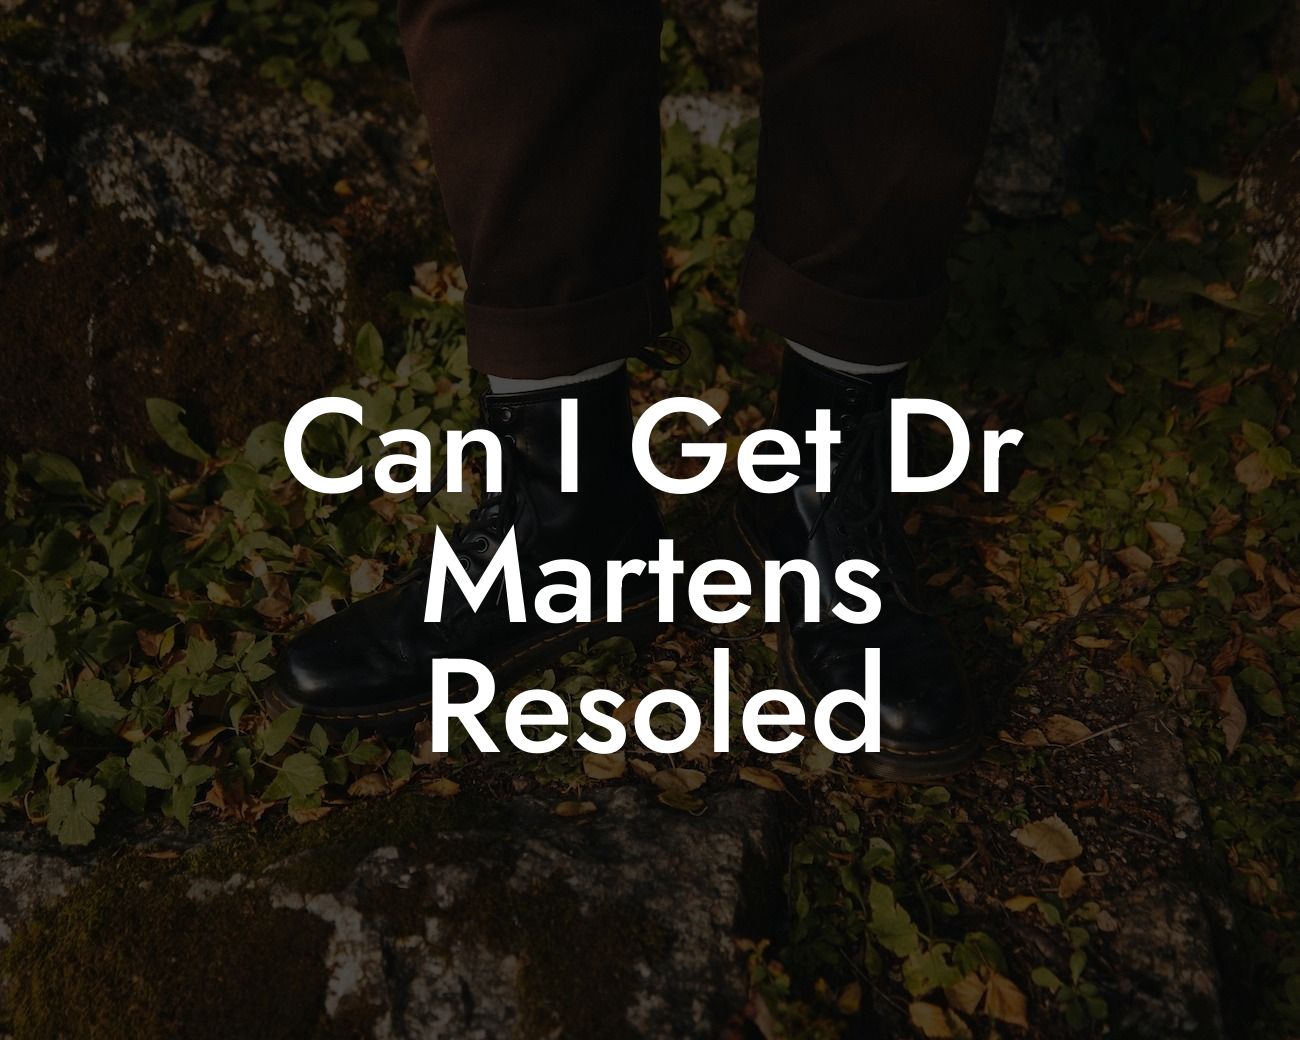 Can I Get Dr Martens Resoled